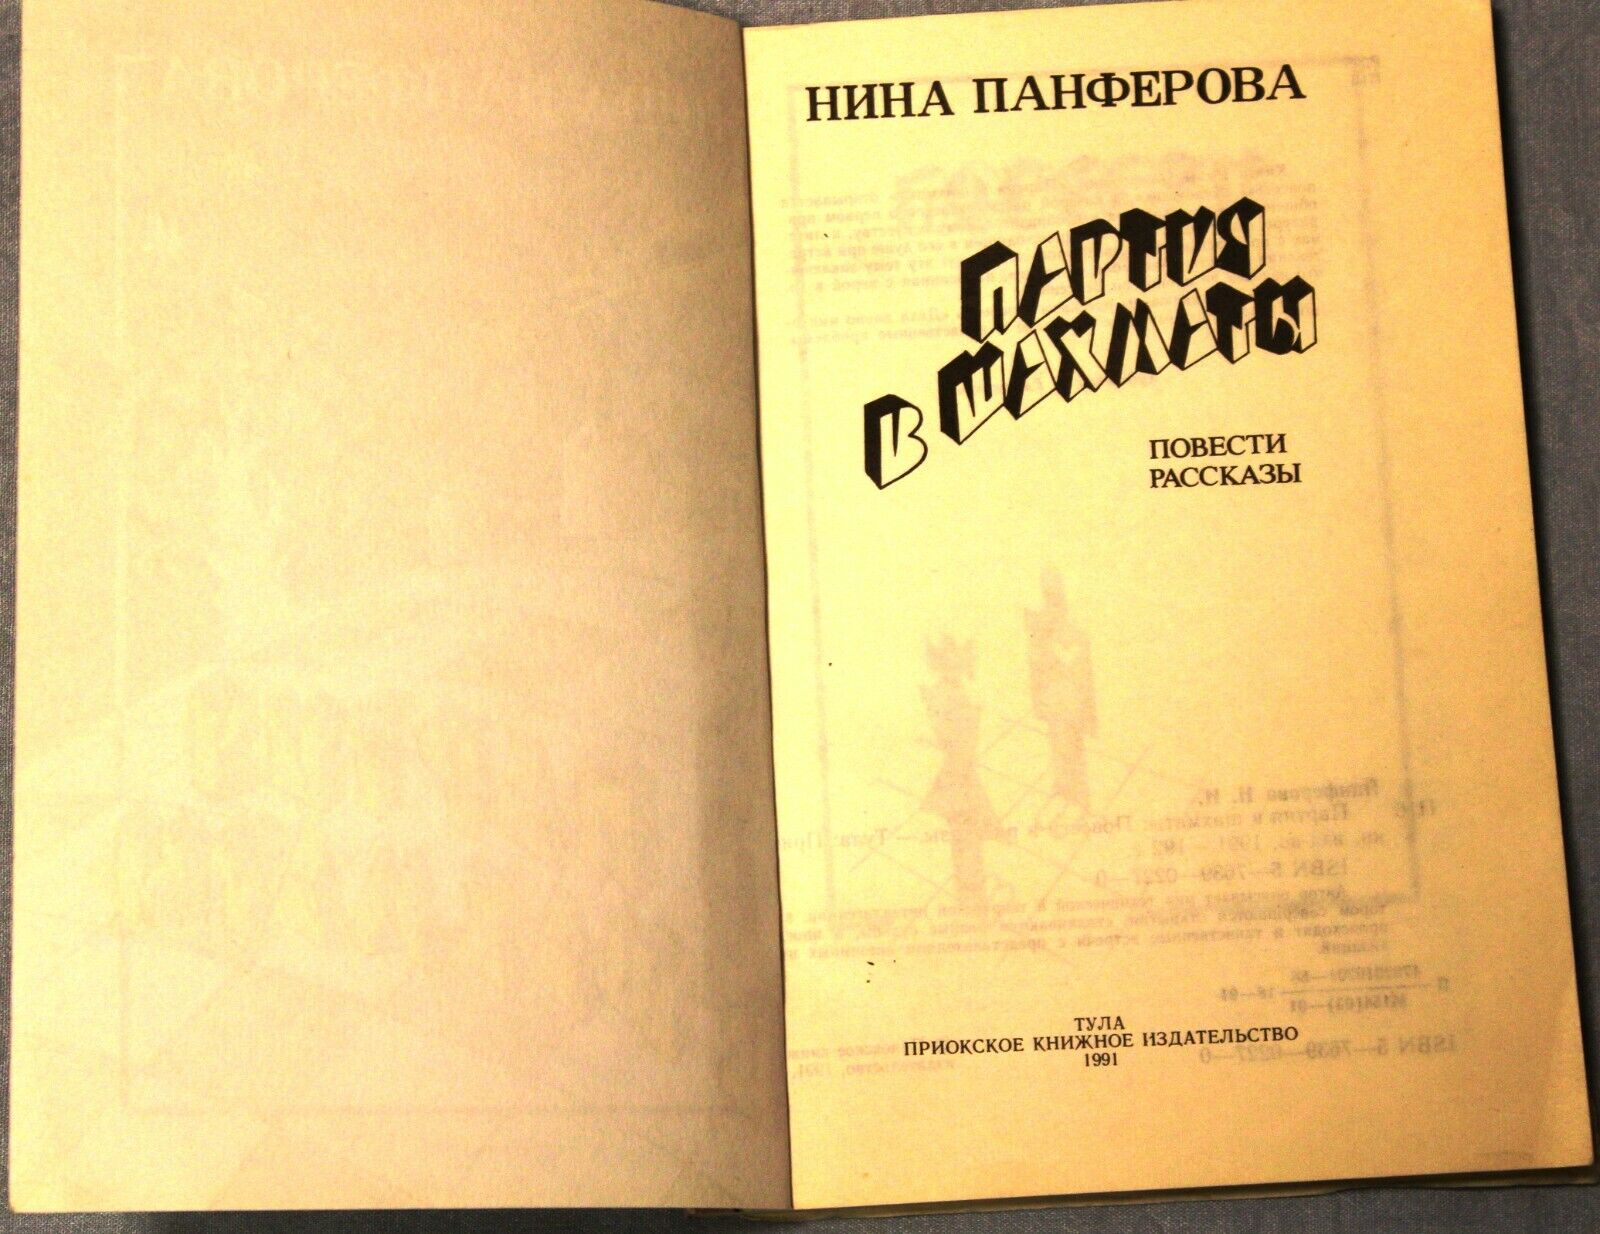 11703.Soviet Chess Book. Game of chess. Panferova.Tula, 1991